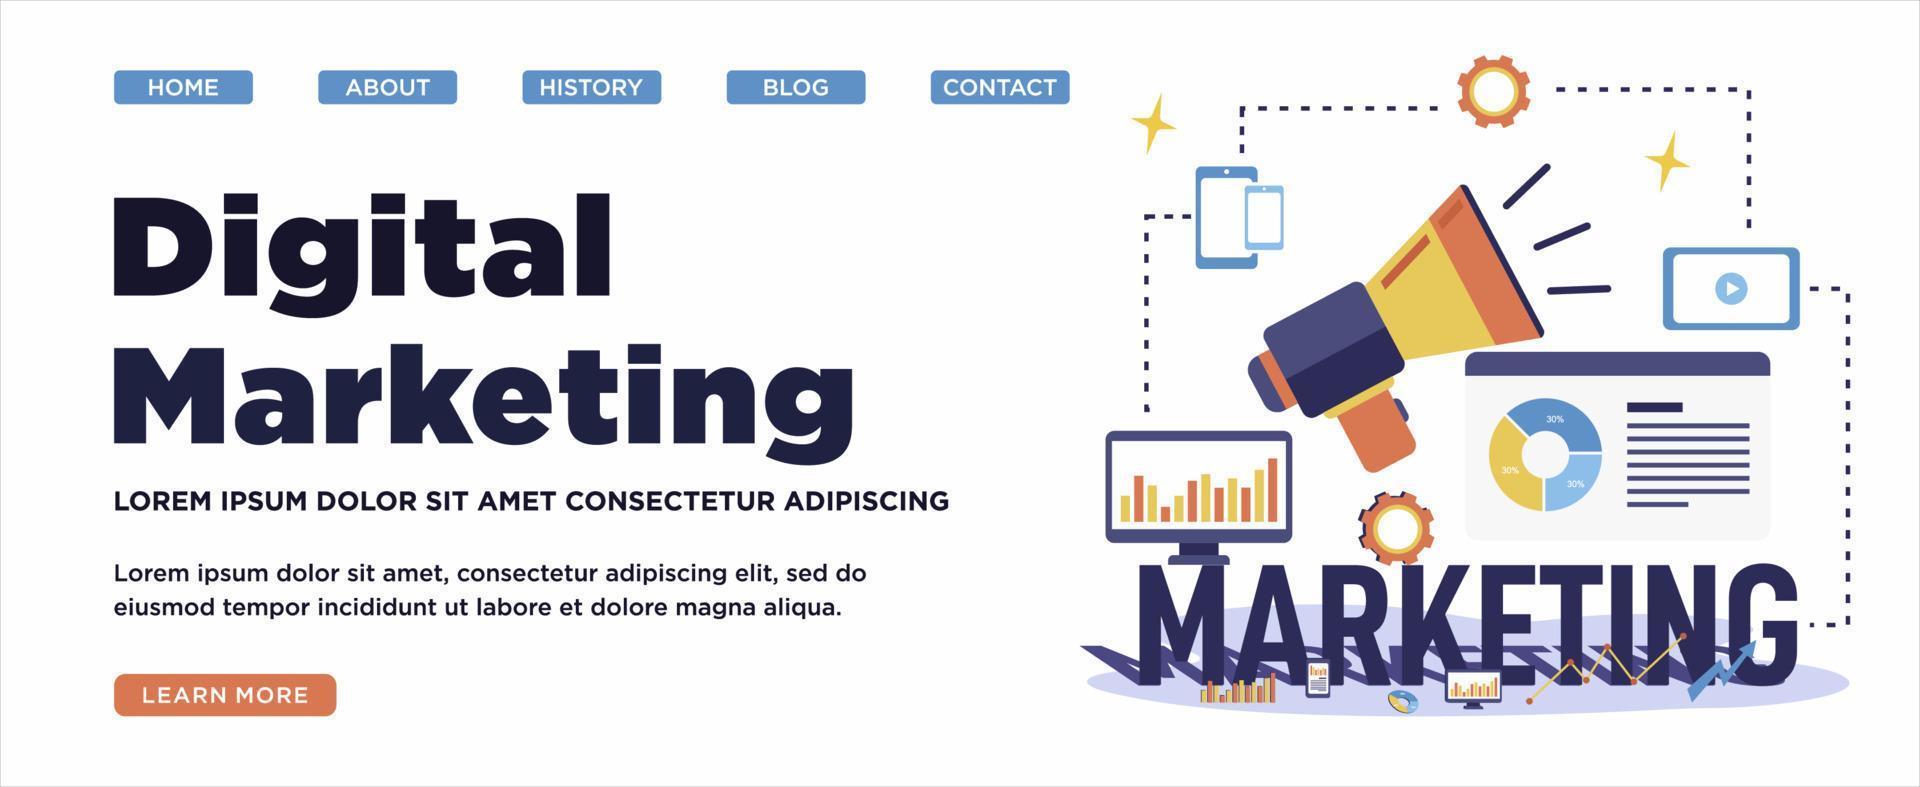 banner web de estrategia de marketing digital vector